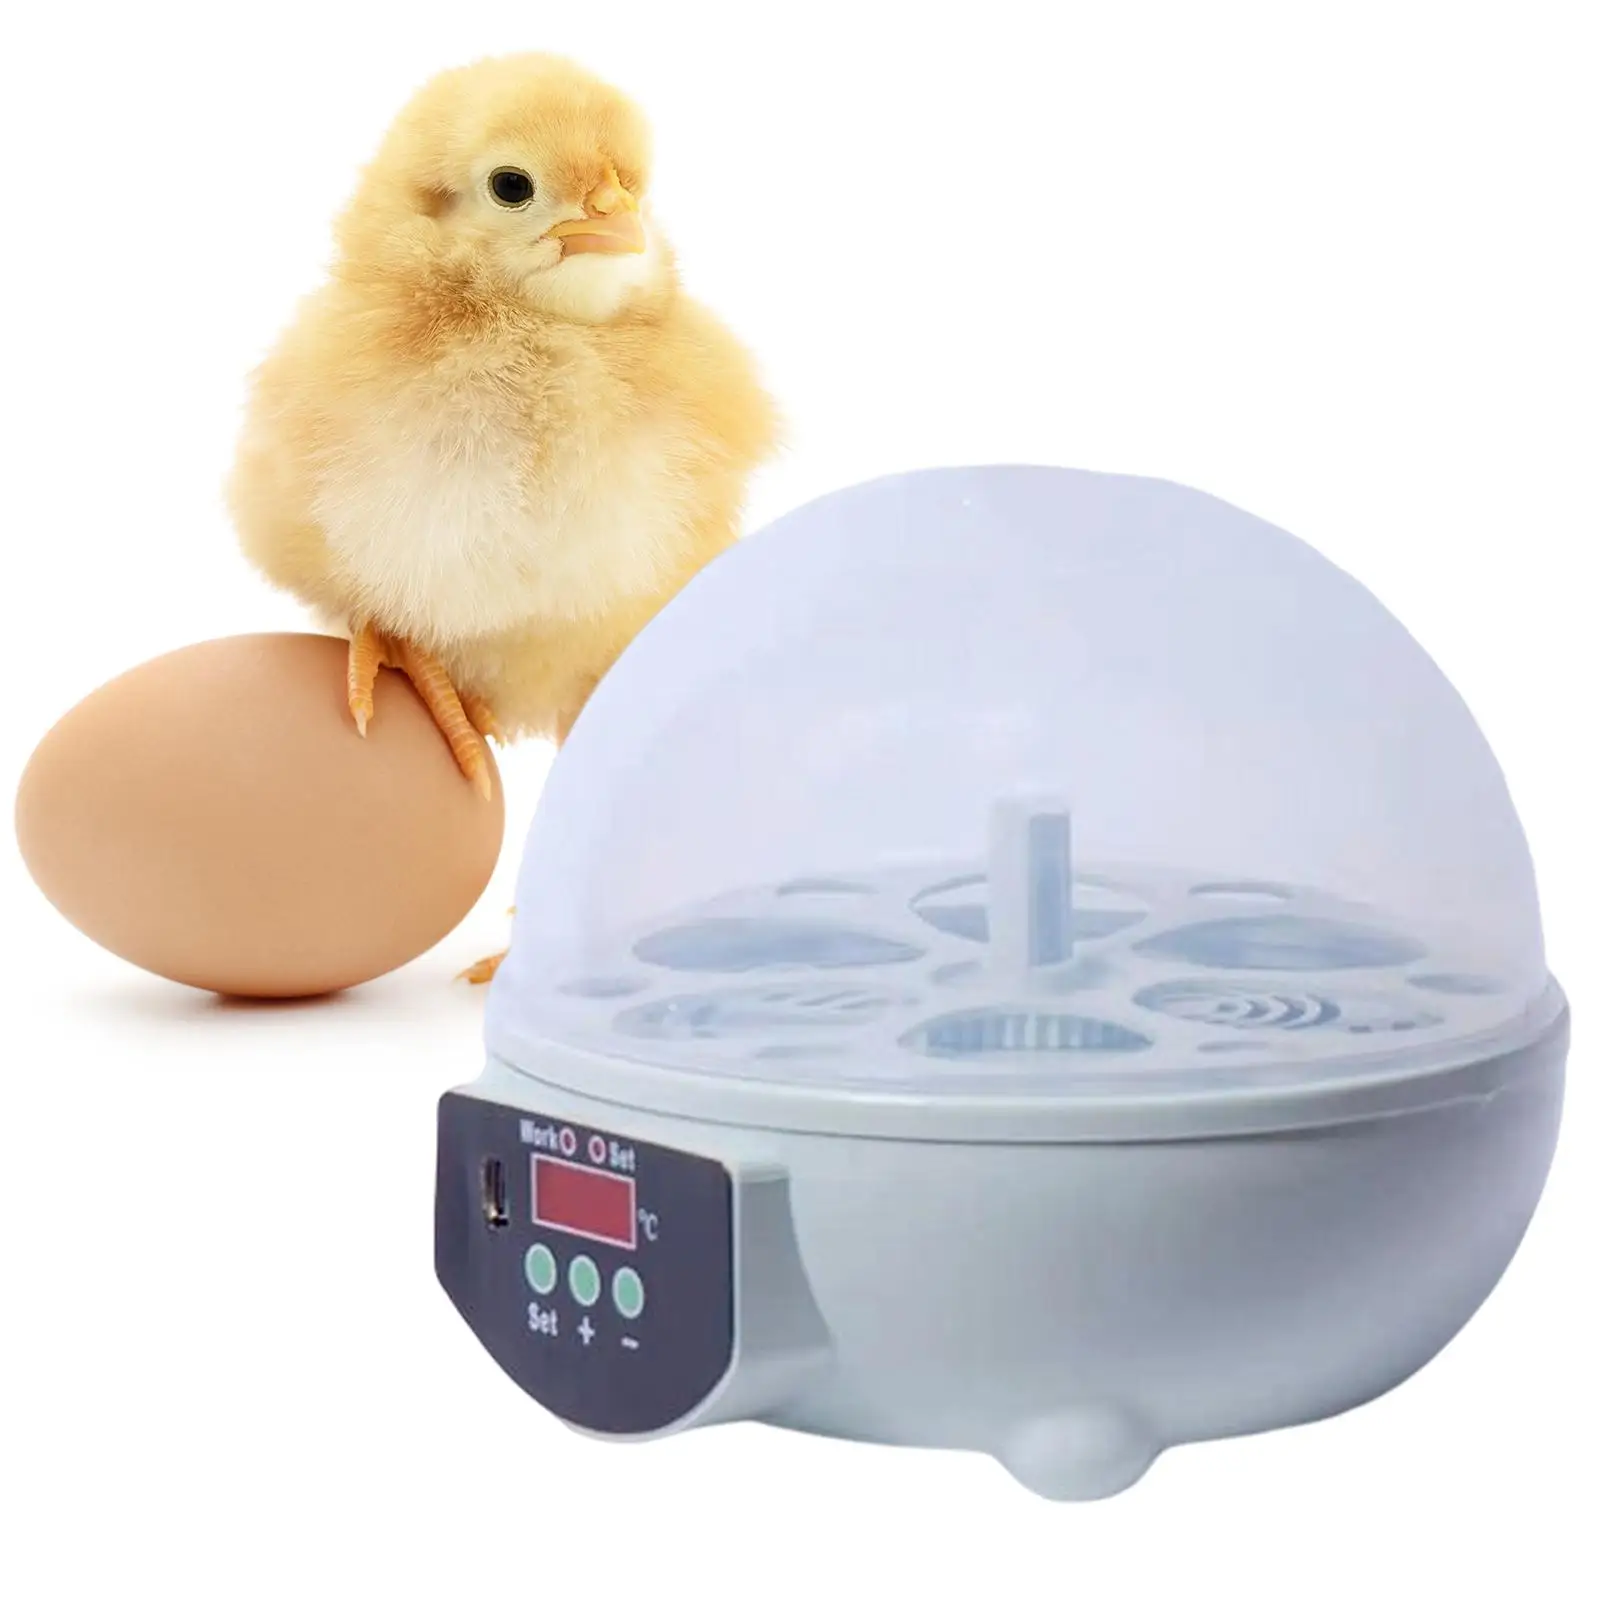 Automatic Egg Incubator Egg Turner Egg Candler Digital Poultry for Chicken